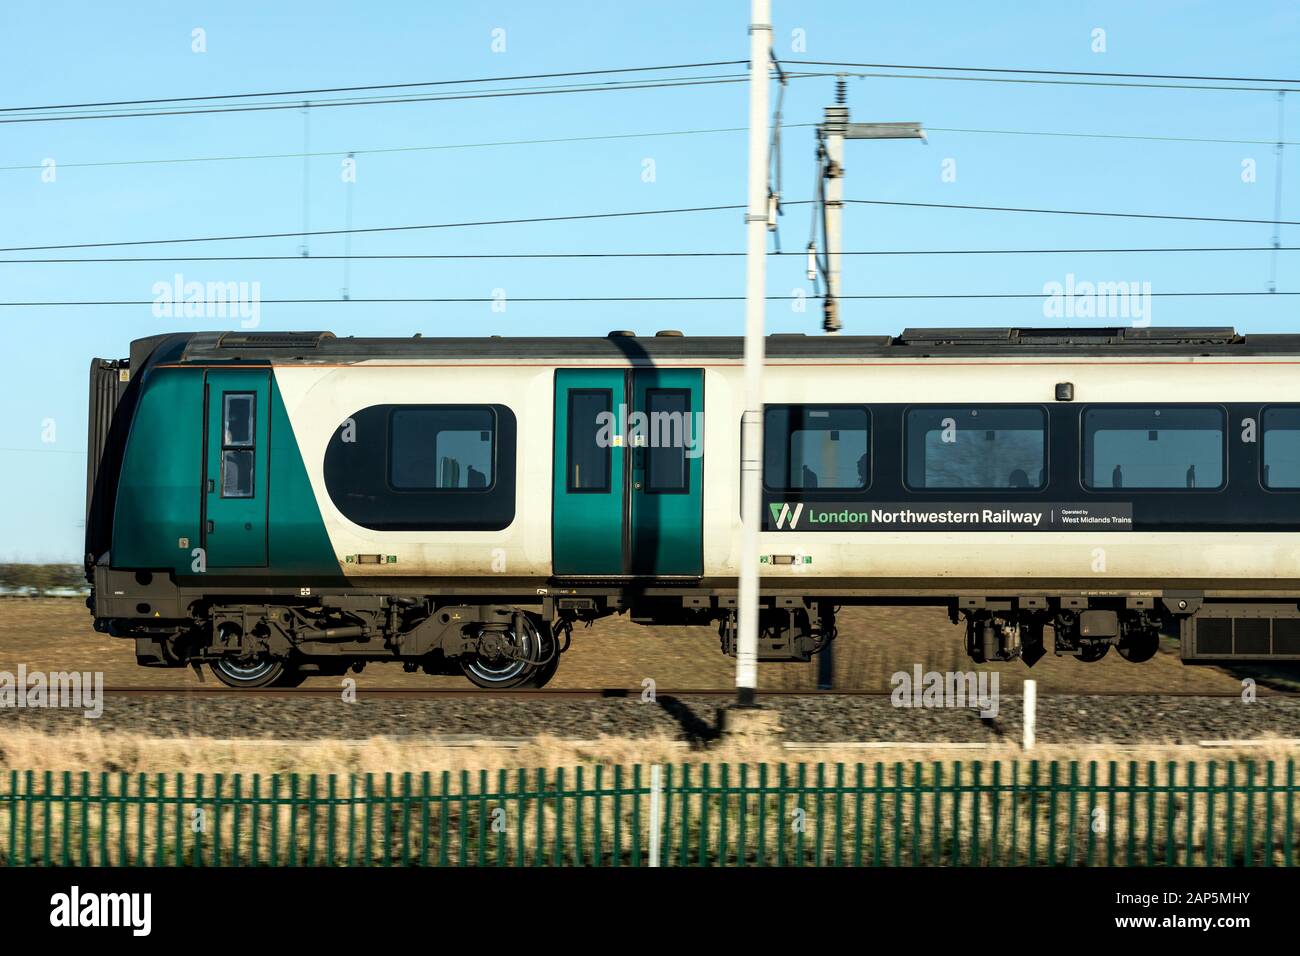 London NorthWestern Railway class 350 electric train on the West Coast Main Line, Northamptonshire, UK Stock Photo